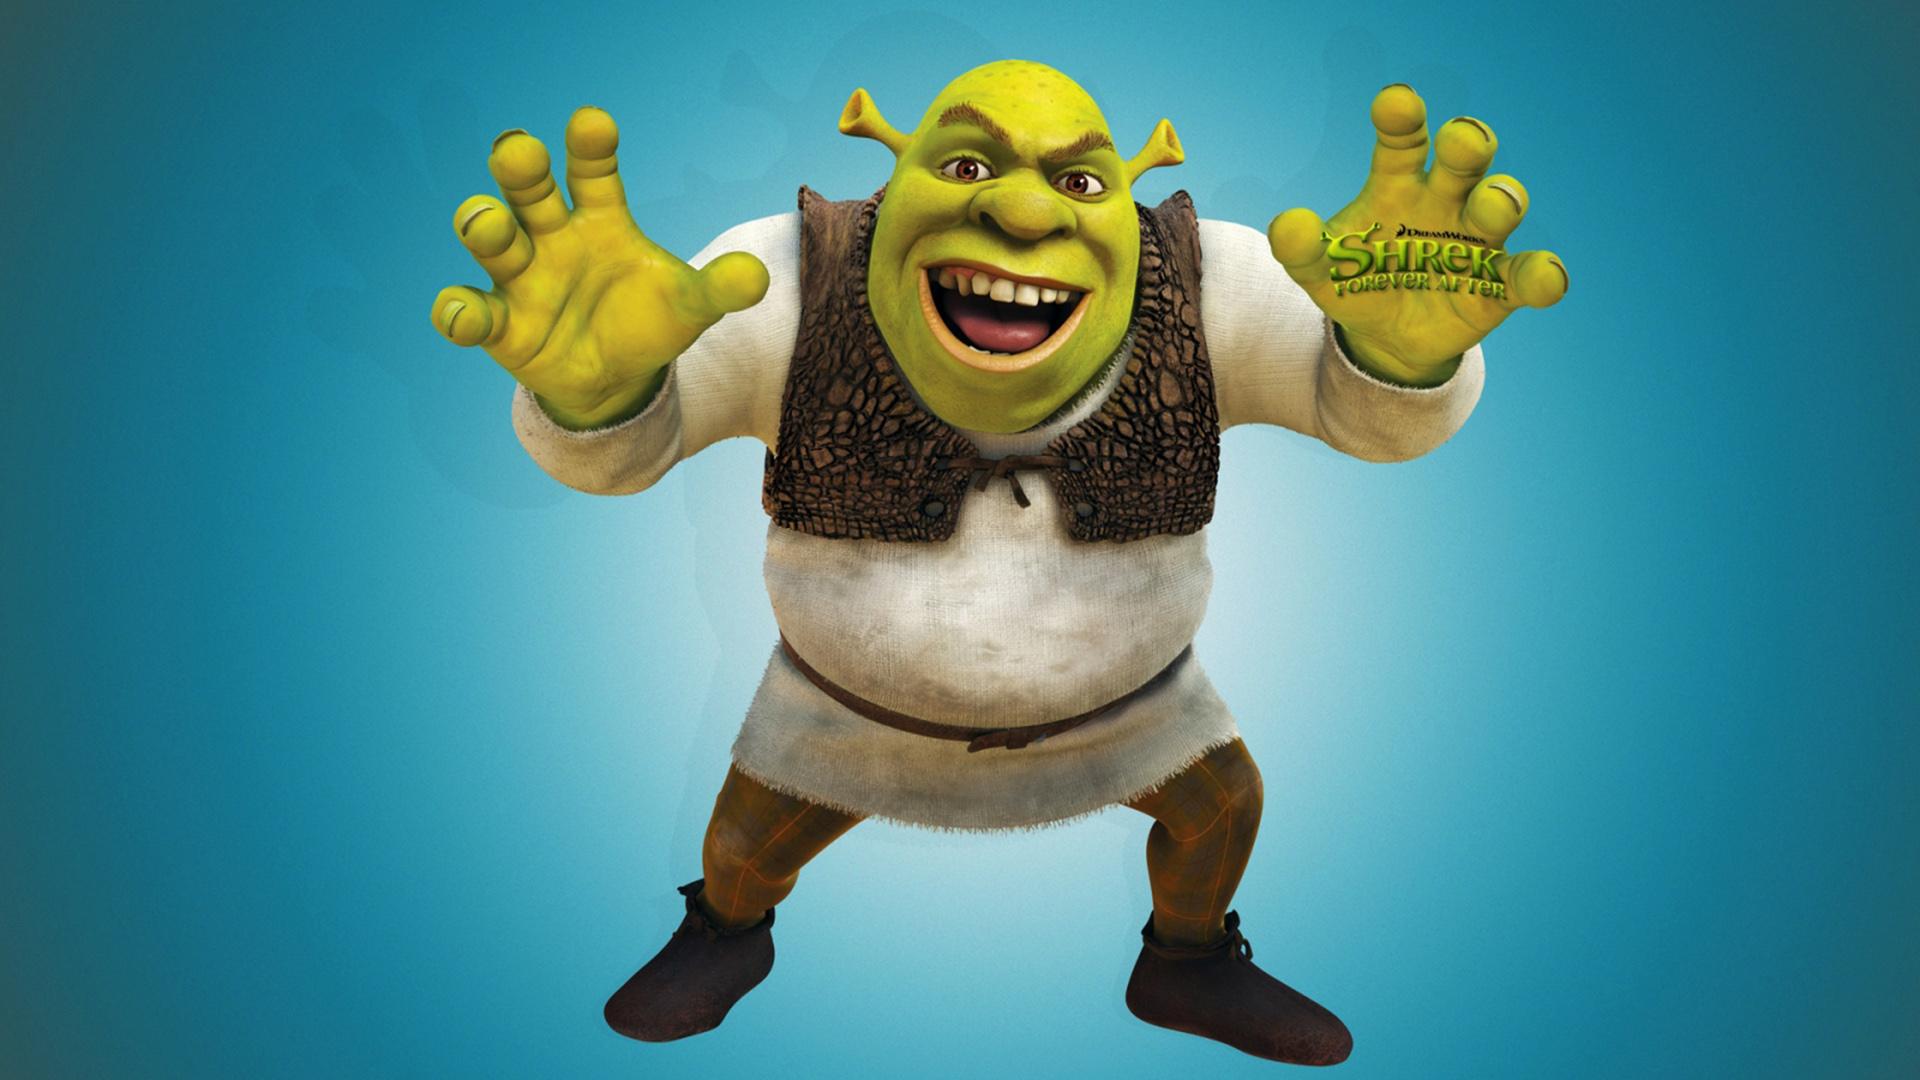 Shrek HD Image Wallpaper for Android